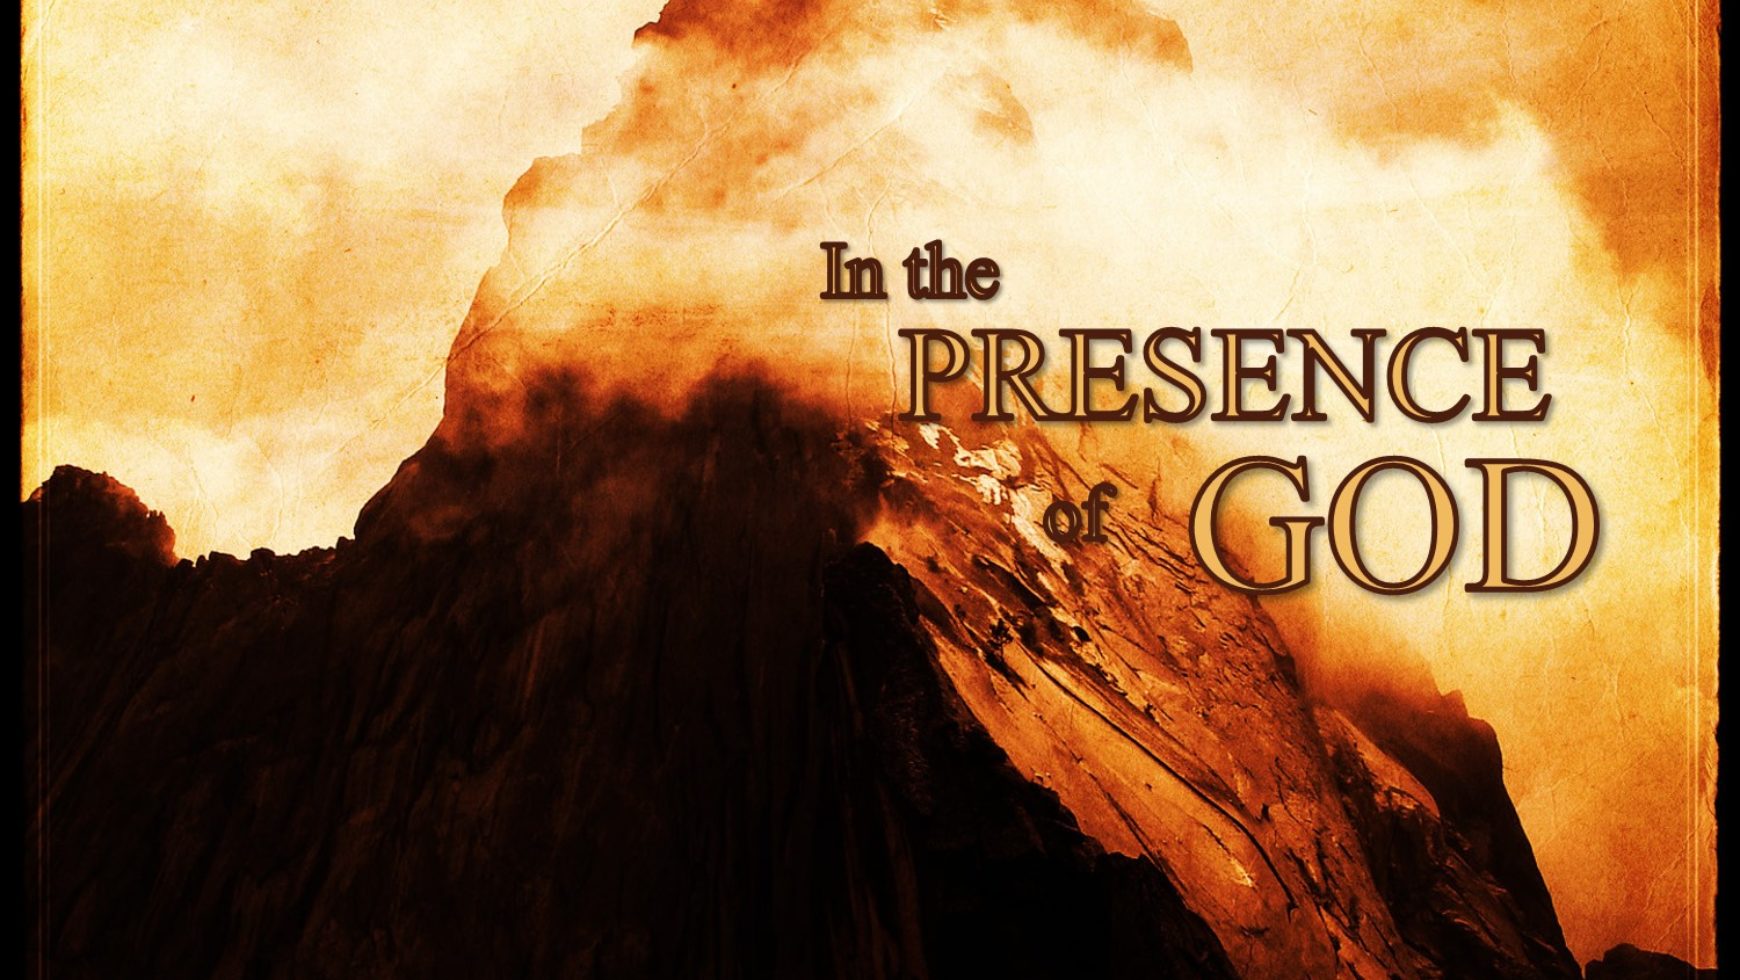 The Presence Of God